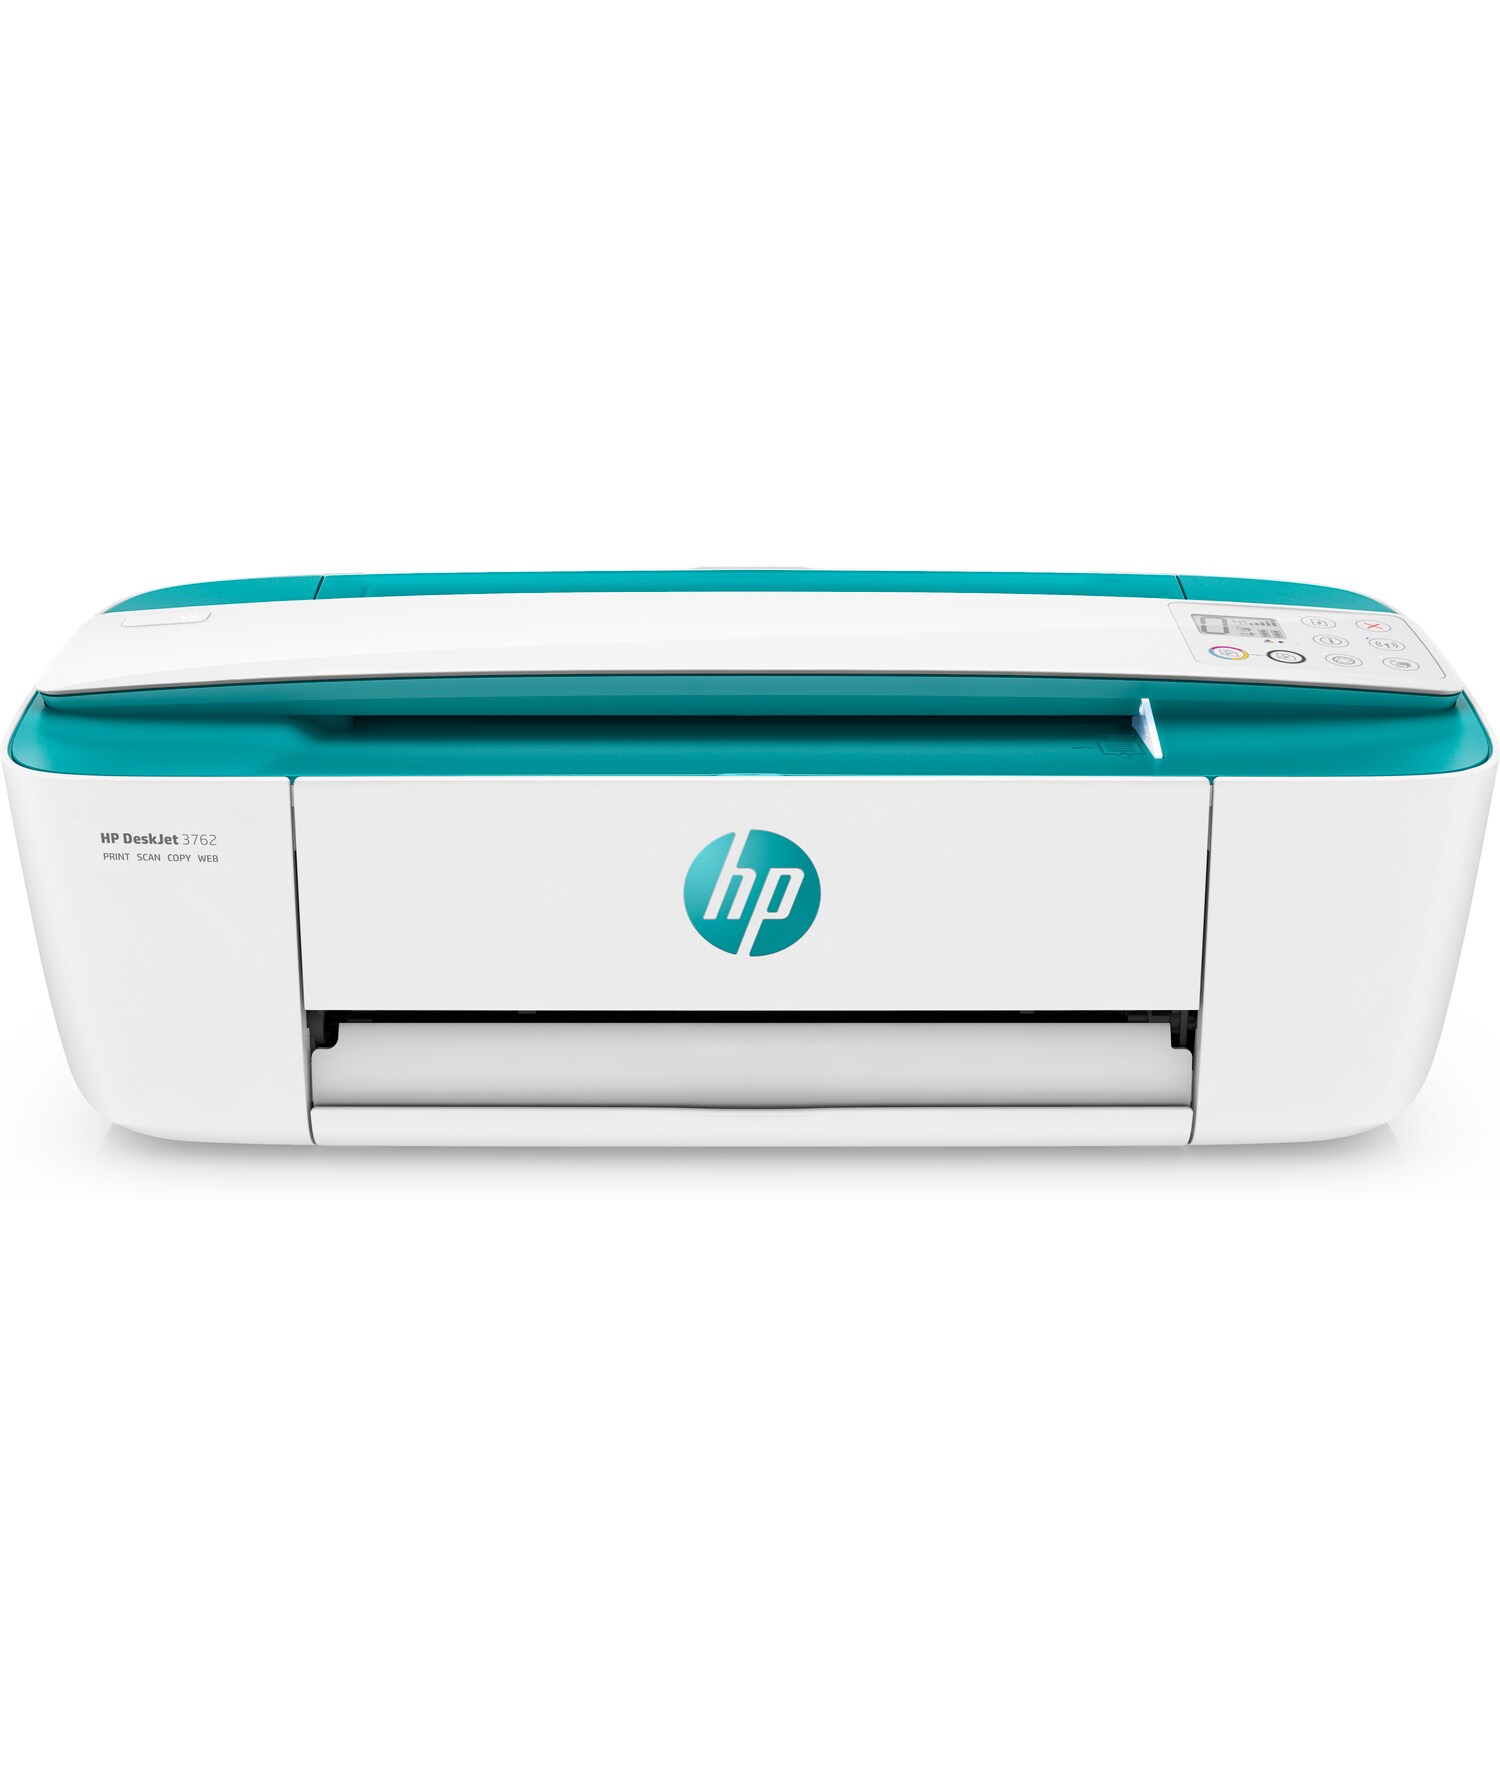 HP DeskJet/ 3762/ MF/ Ink/ A4/ Wi-Fi/ USB 